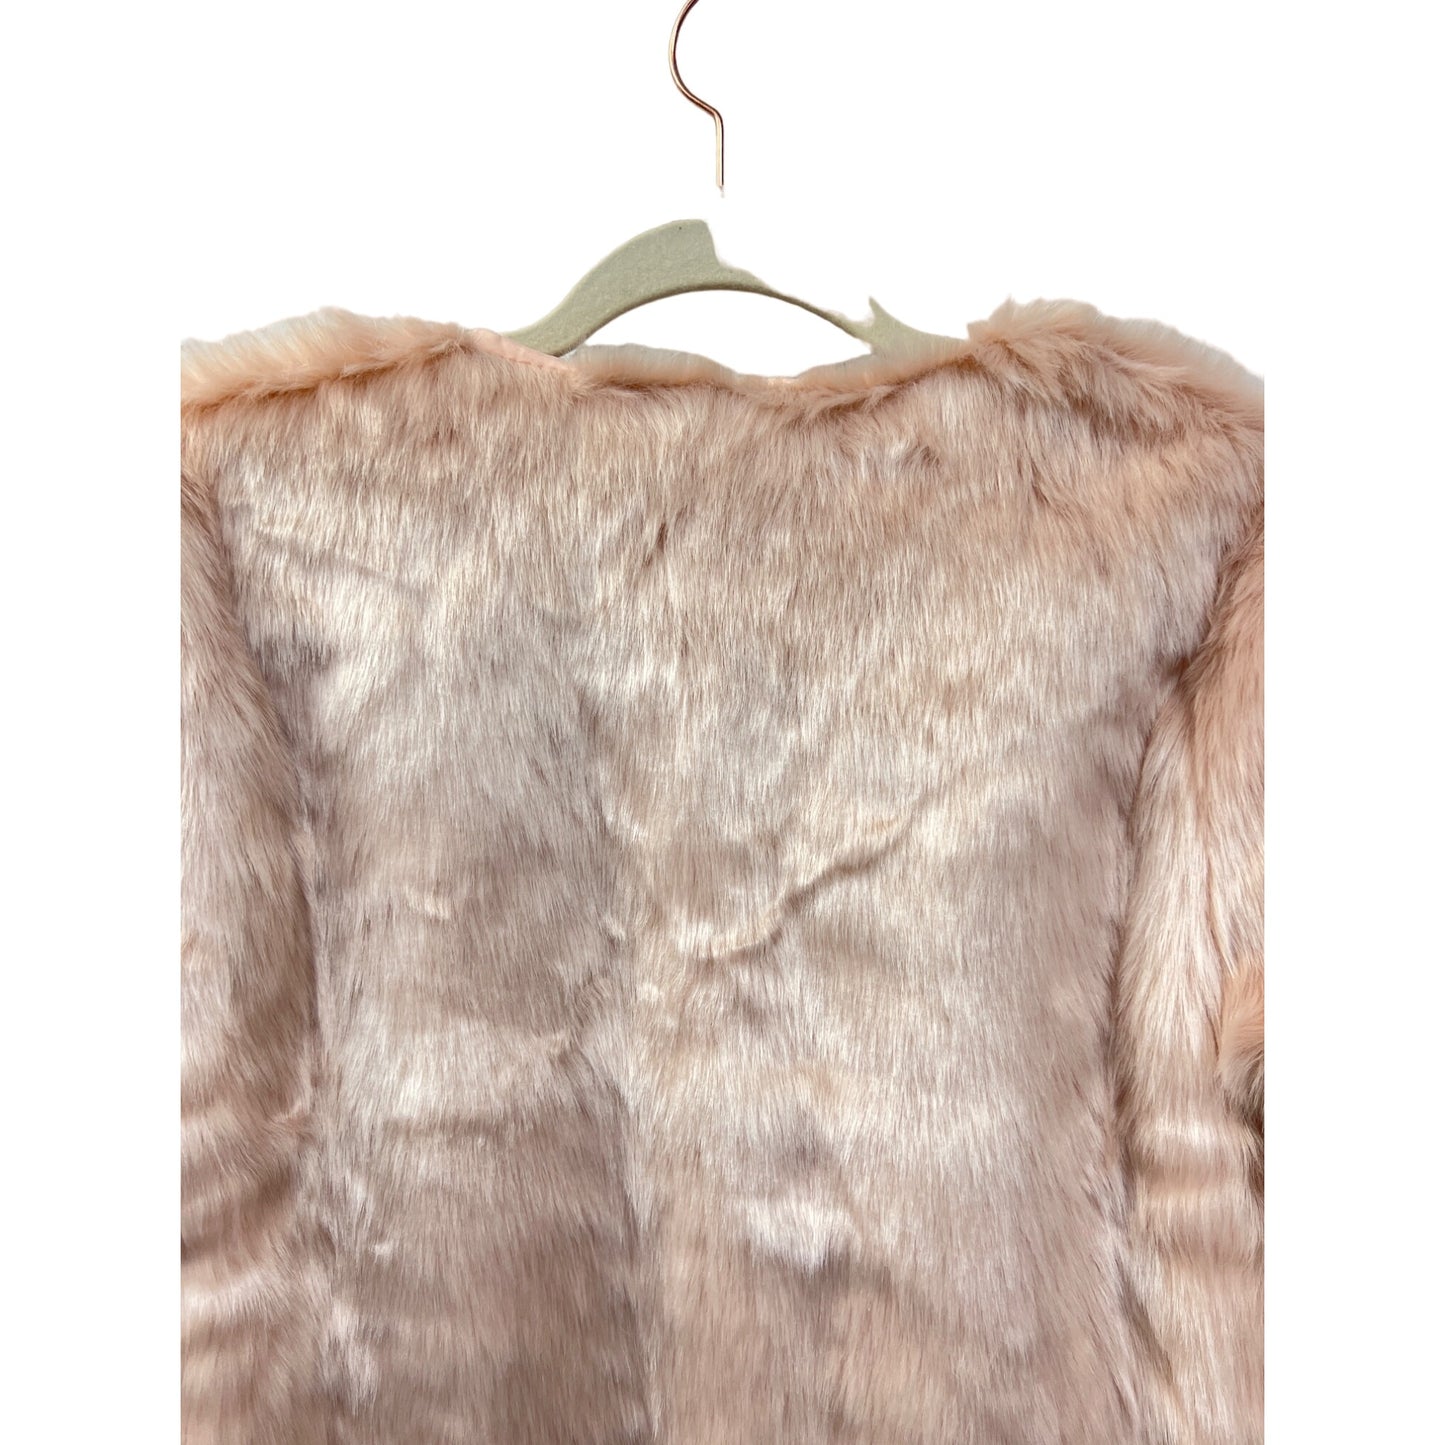 Lanshifei NWT Pink Faux Fur Bolero Jacket